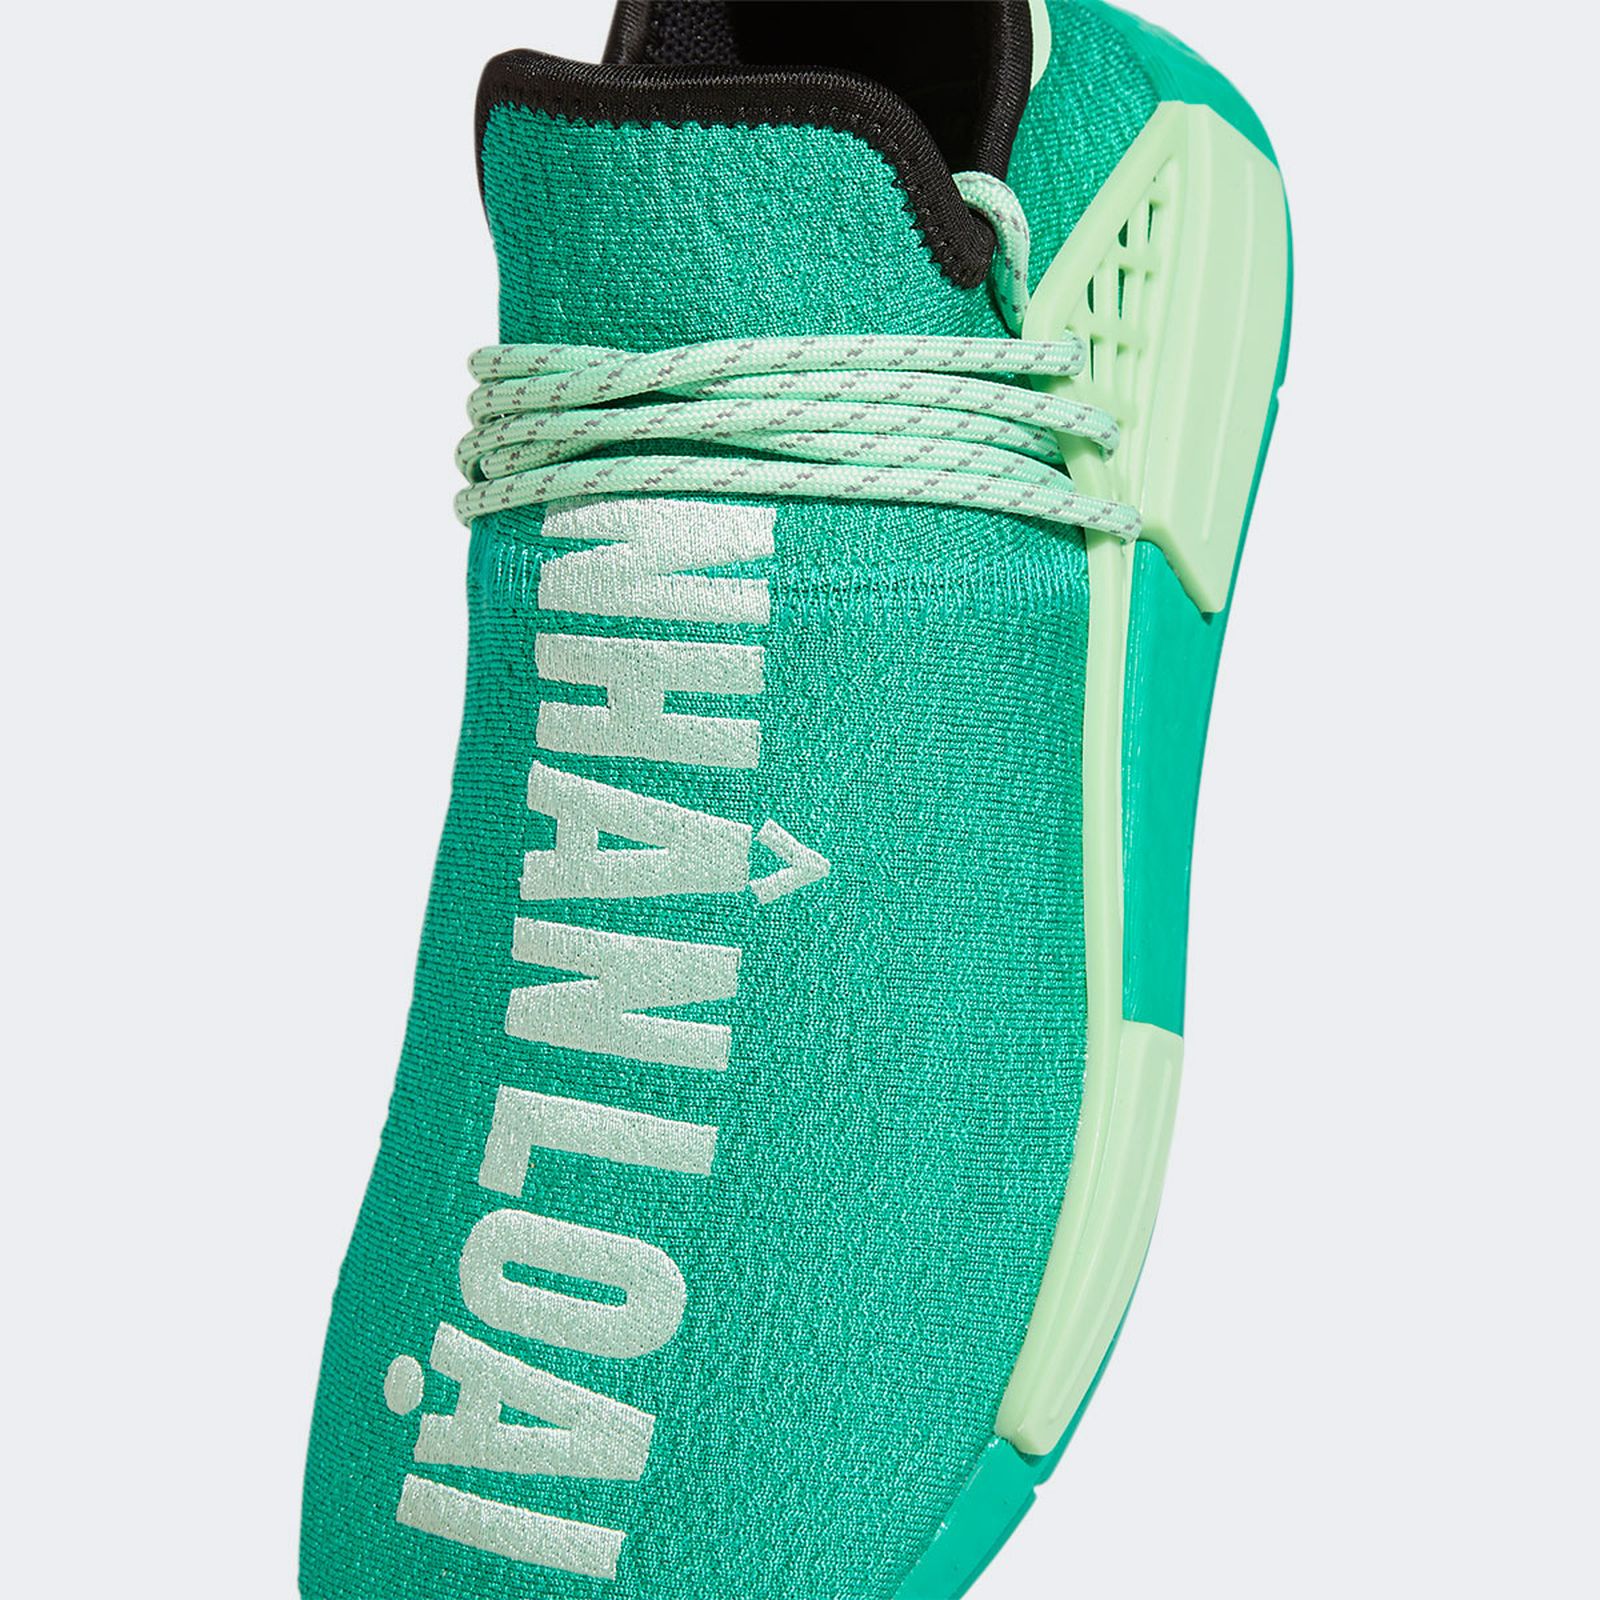 Pjece ægtefælle hane Pharrell x adidas HU NMD "Mint Green": Images & Release Info